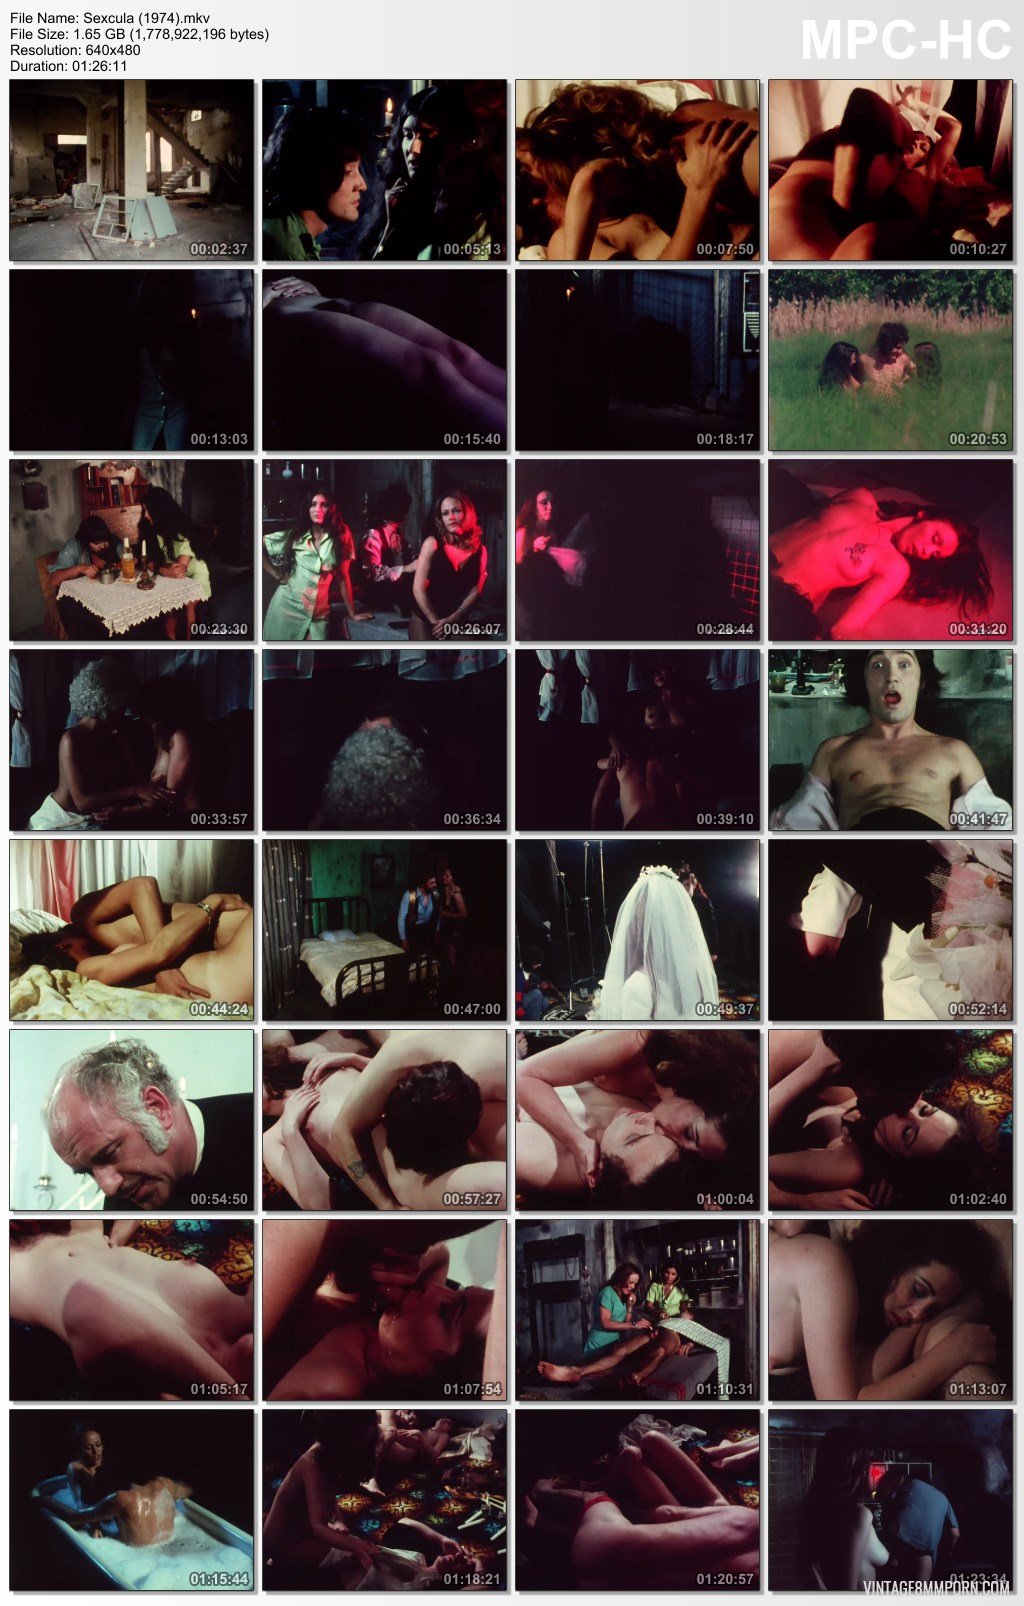 Sexcula - Sexcula (1974) Â» Vintage 8mm Porn, 8mm Sex Films, Classic Porn, Stag  Movies, Glamour Films, Silent loops, Reel Porn